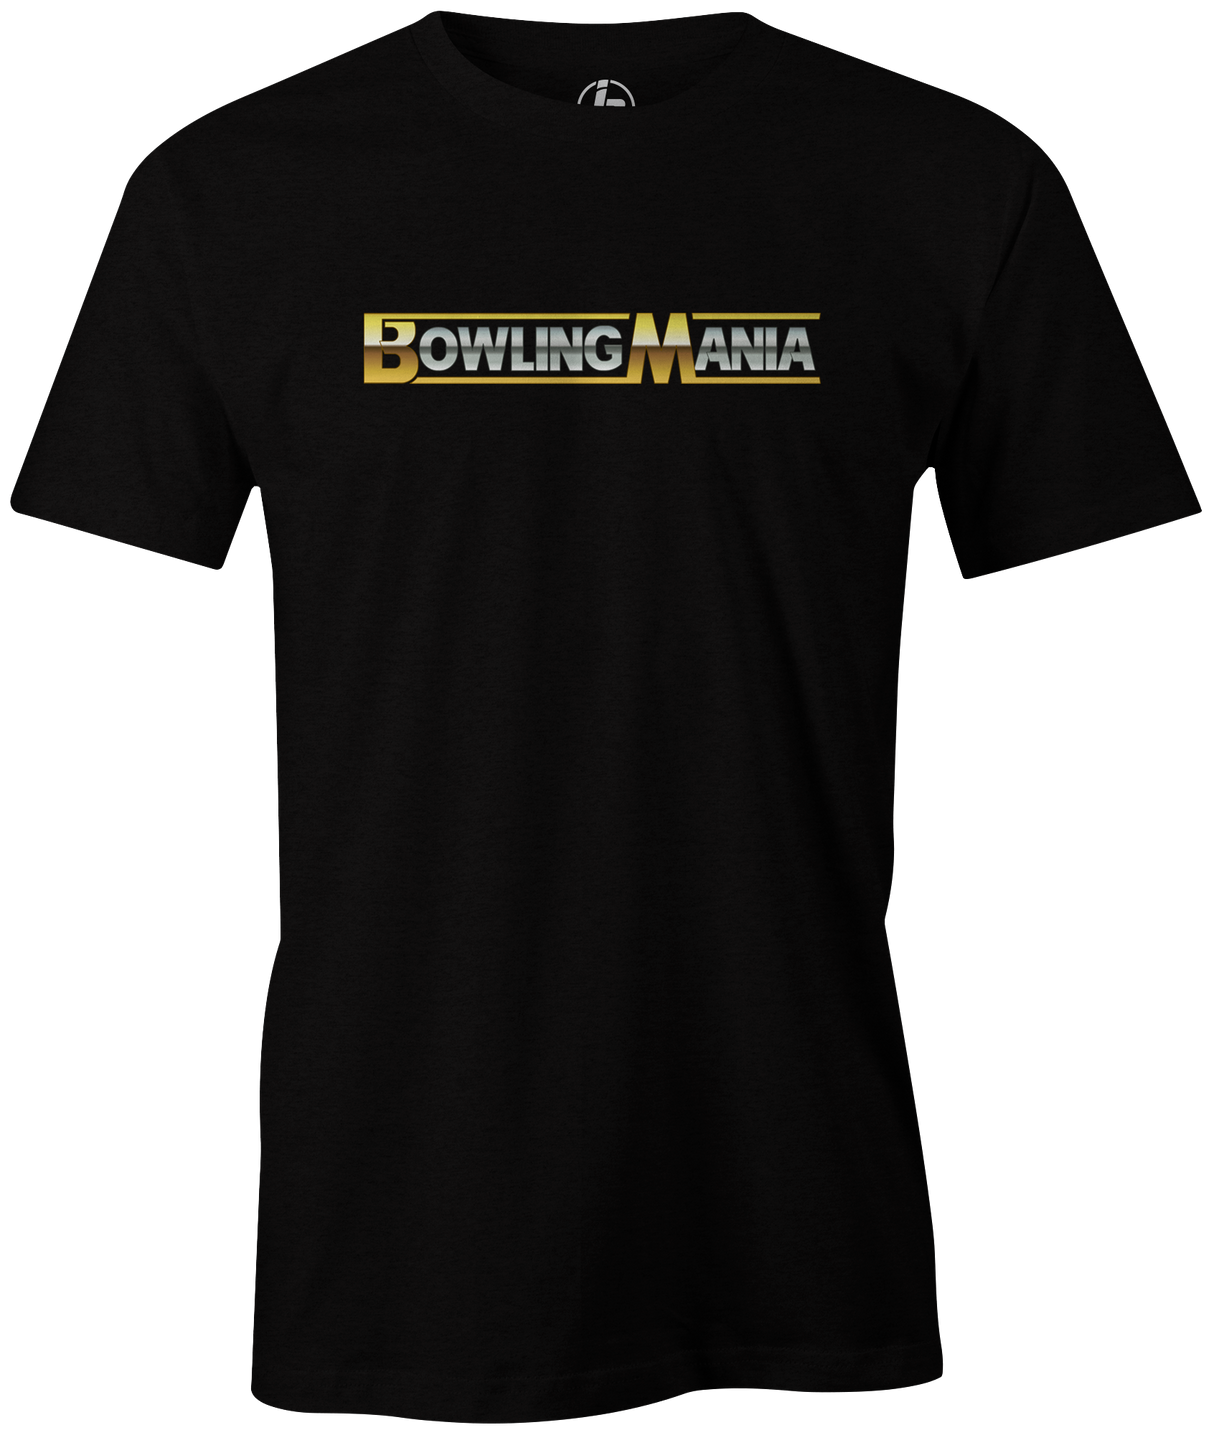 Bowling Mania men's bowling shirt, black, wrestling, cool, vintage, original, hulk hogan, tee-shirt, tee shirt, tees, apparel, merch